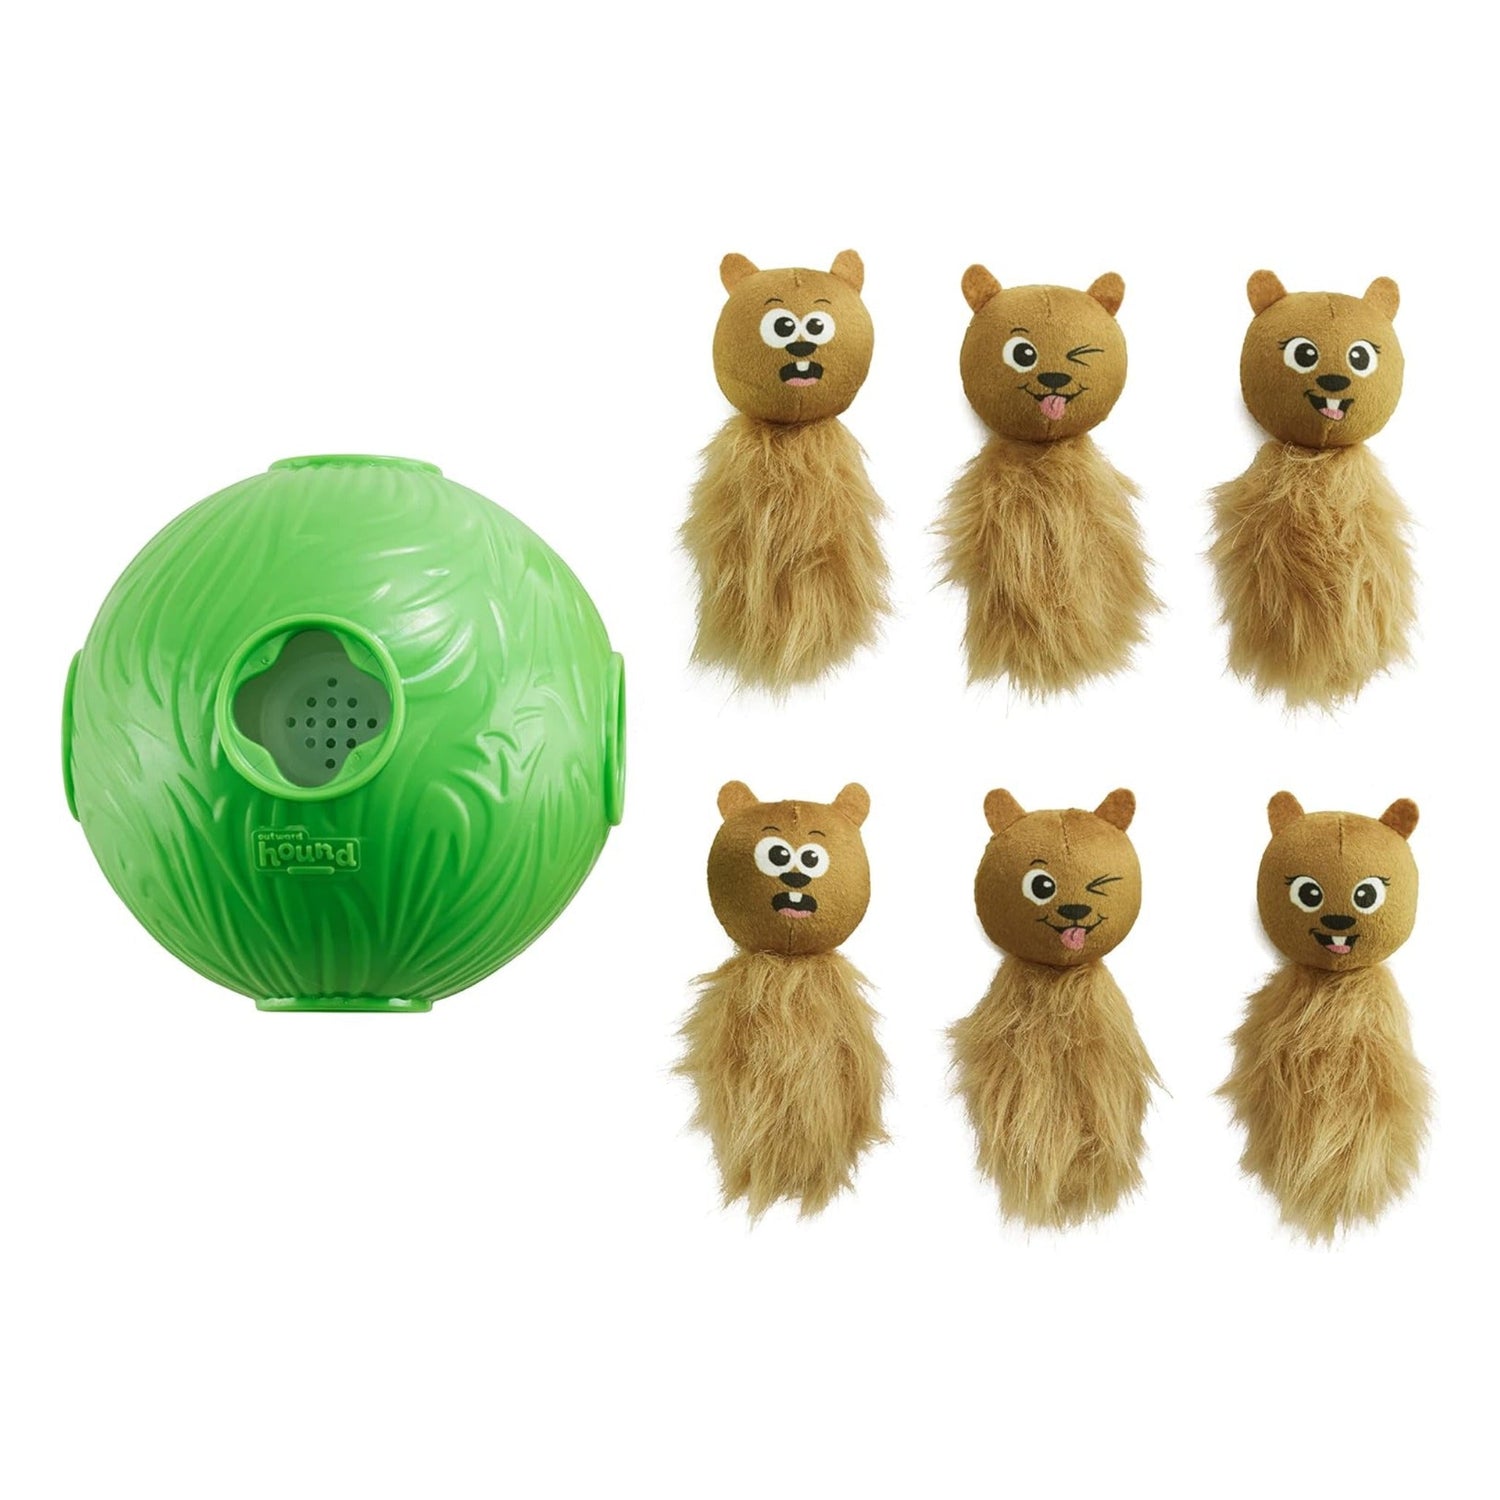 Nina Ottosson Dog Snuffle N' Treat Ball, Intelligence Toy